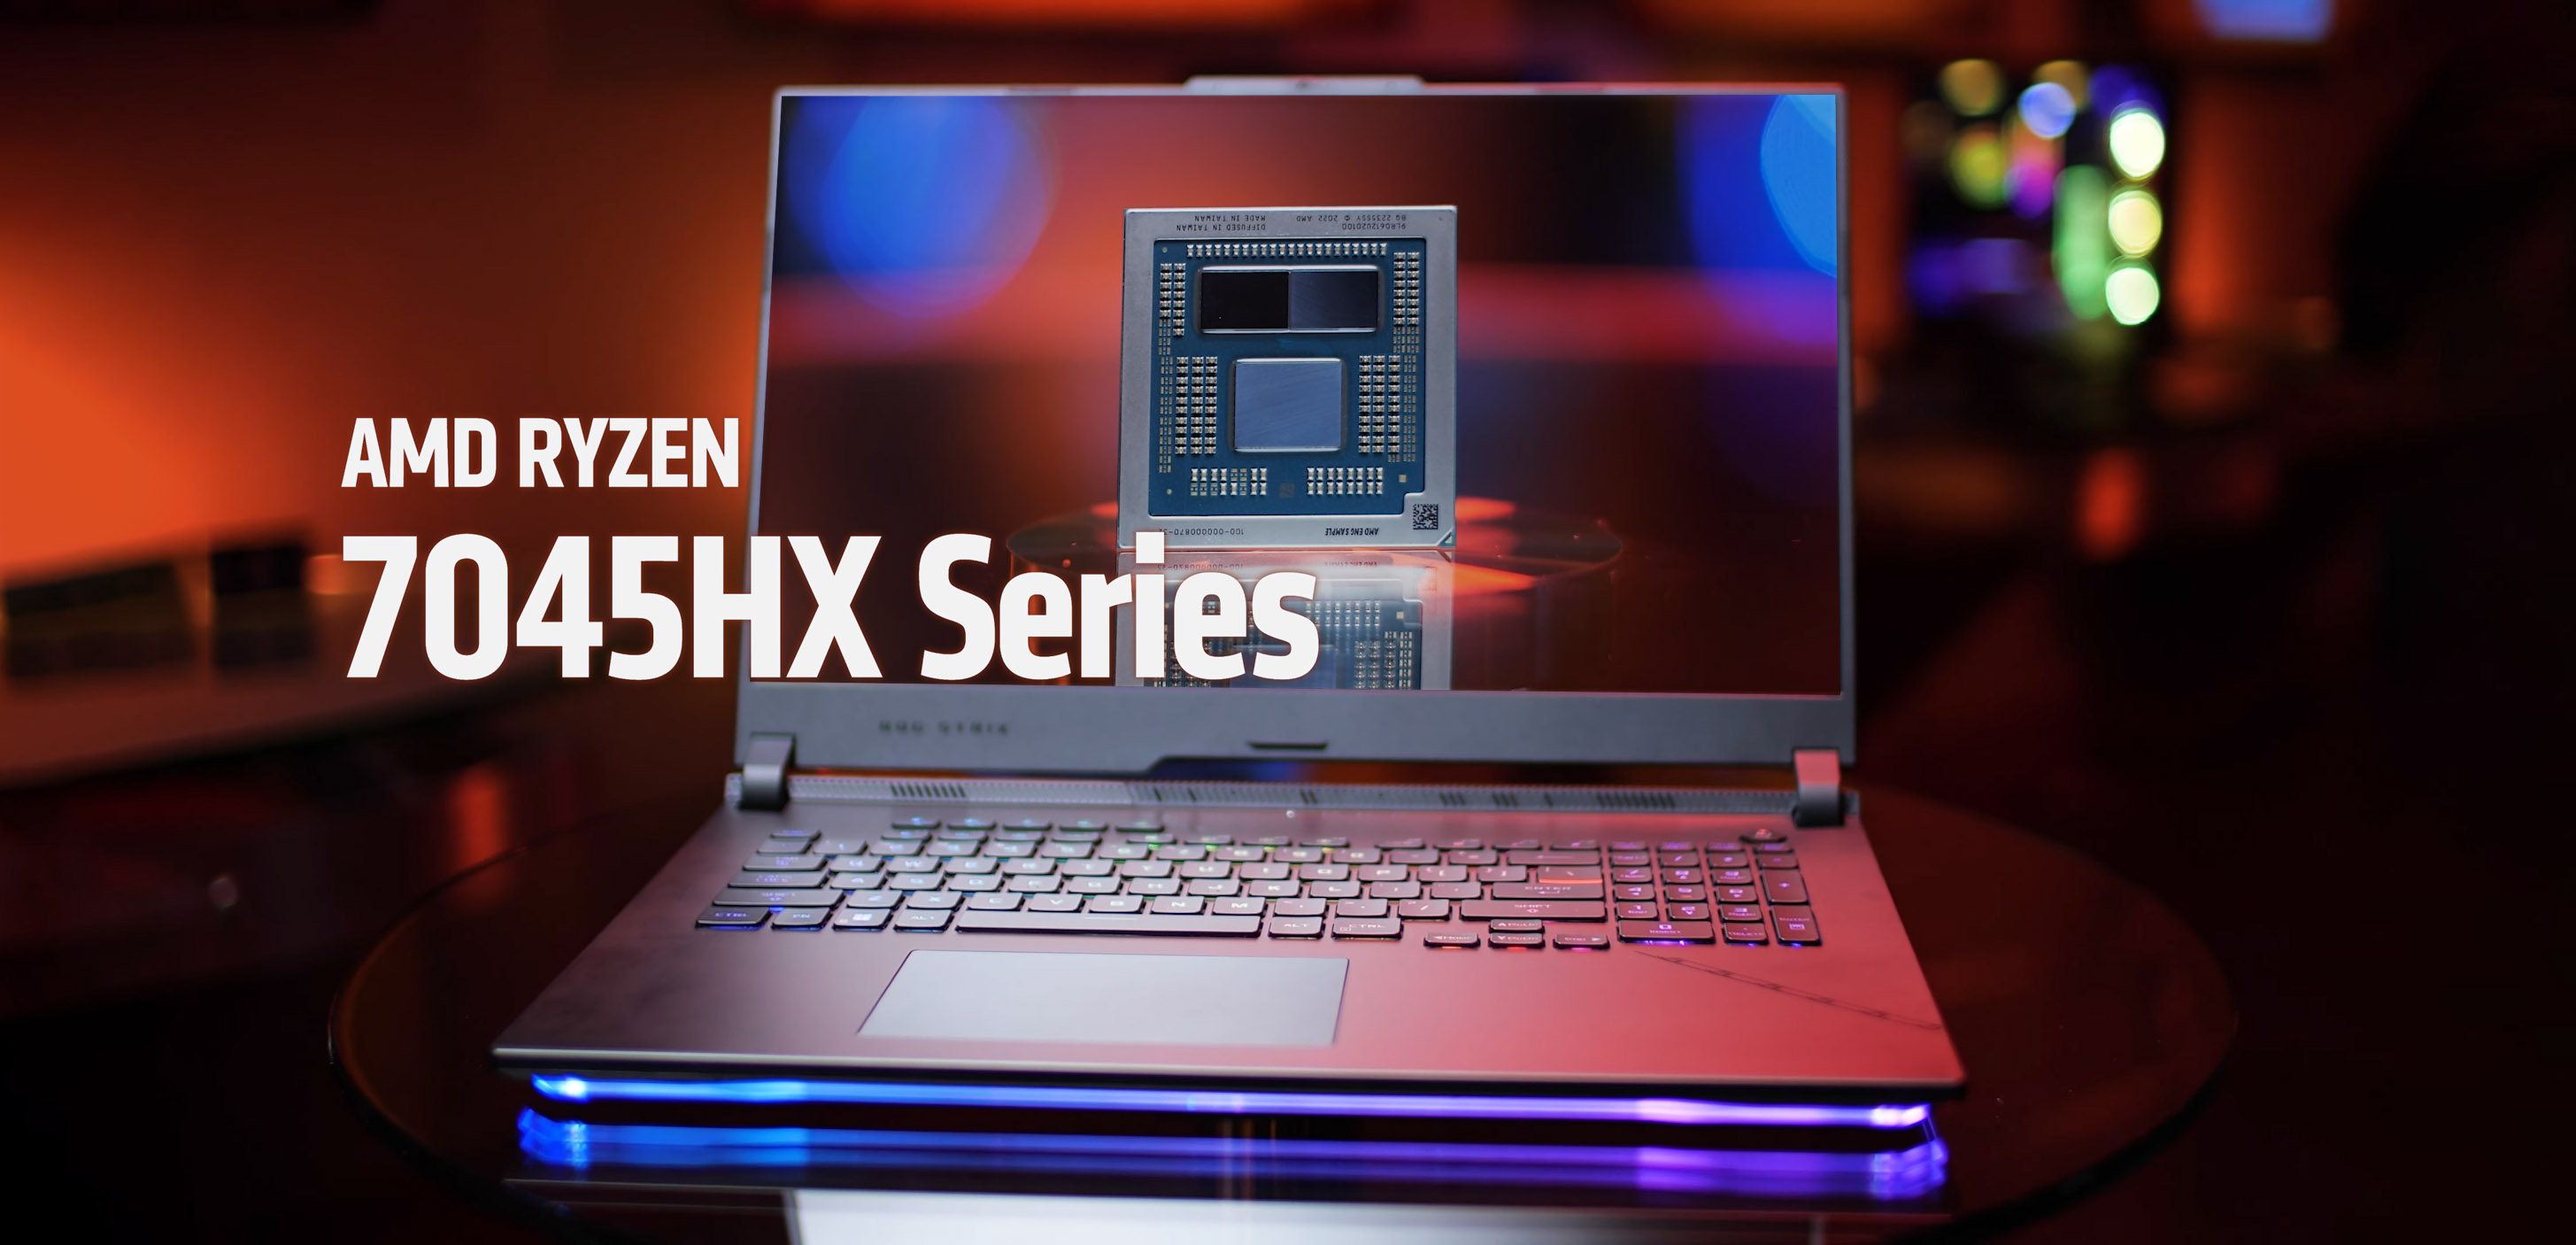 AMD Ryzen 7045HX “Zen4” Dragon Range 16-core laptops hit retail starting at $1799